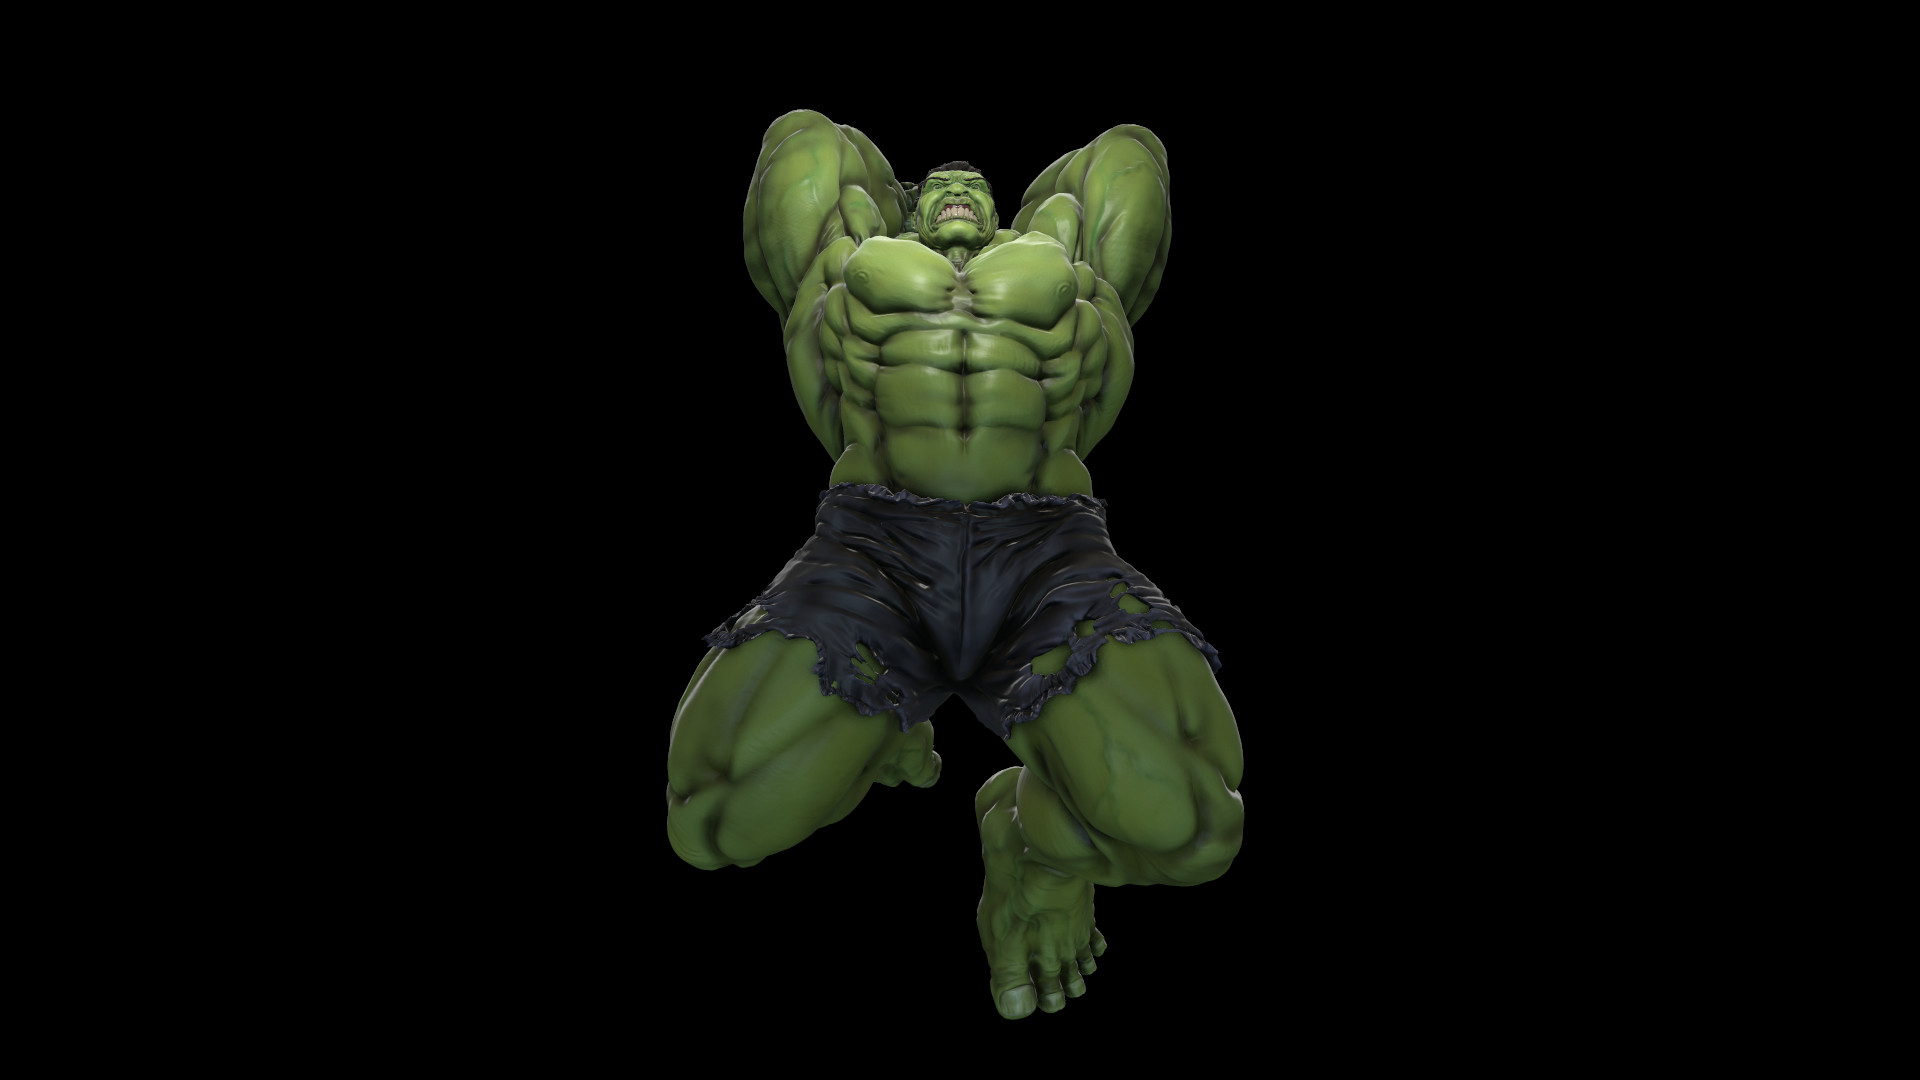 ArtStation - Hulk Smash